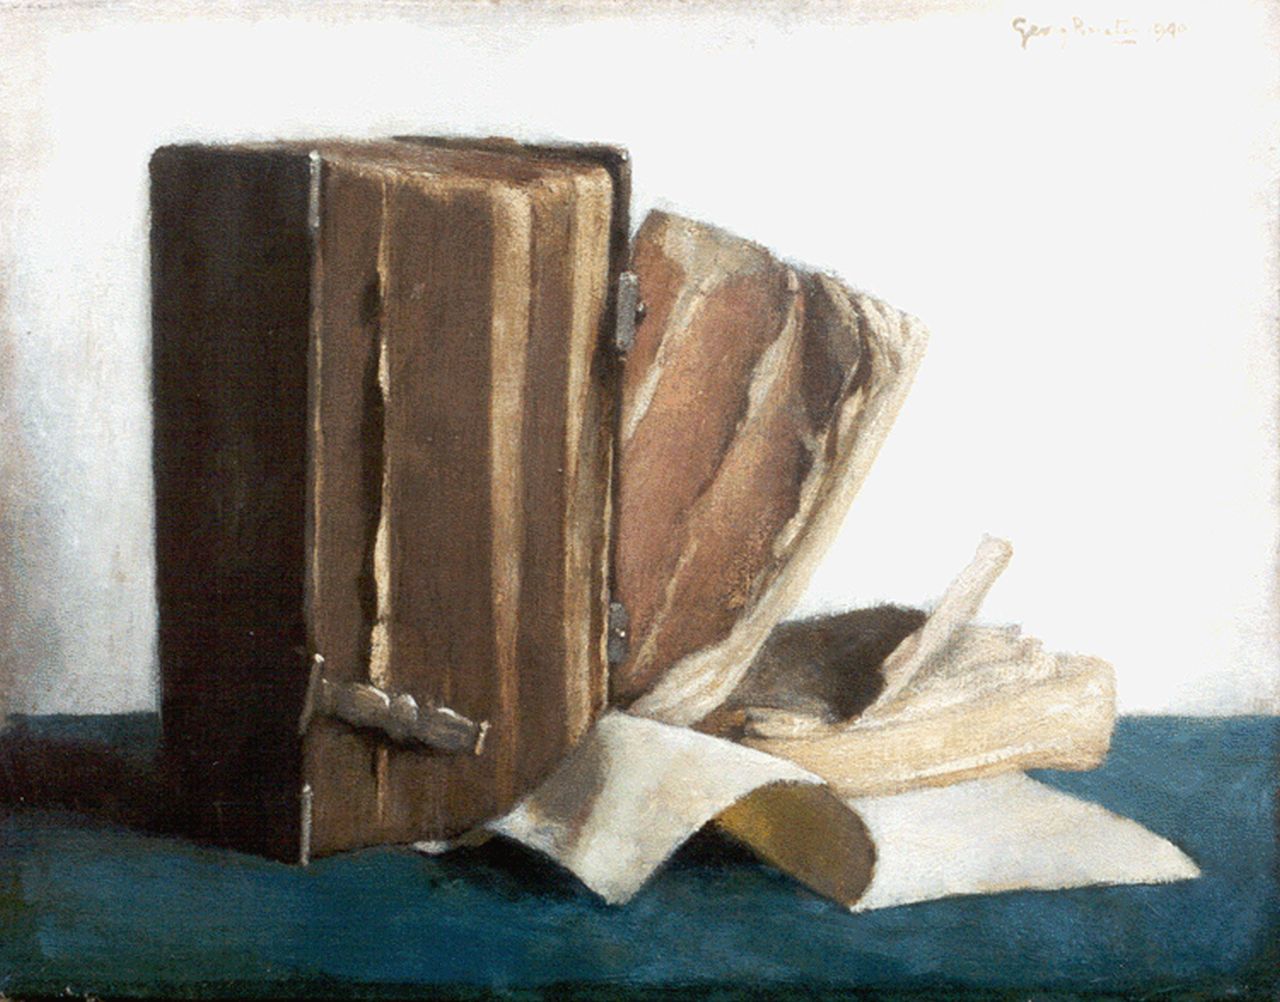 Rueter W.C.G.  | Wilhelm Christian 'Georg' Rueter, Old books, Öl auf Leinwand 28,4 x 36,2 cm, signed u.r. und dated 1940